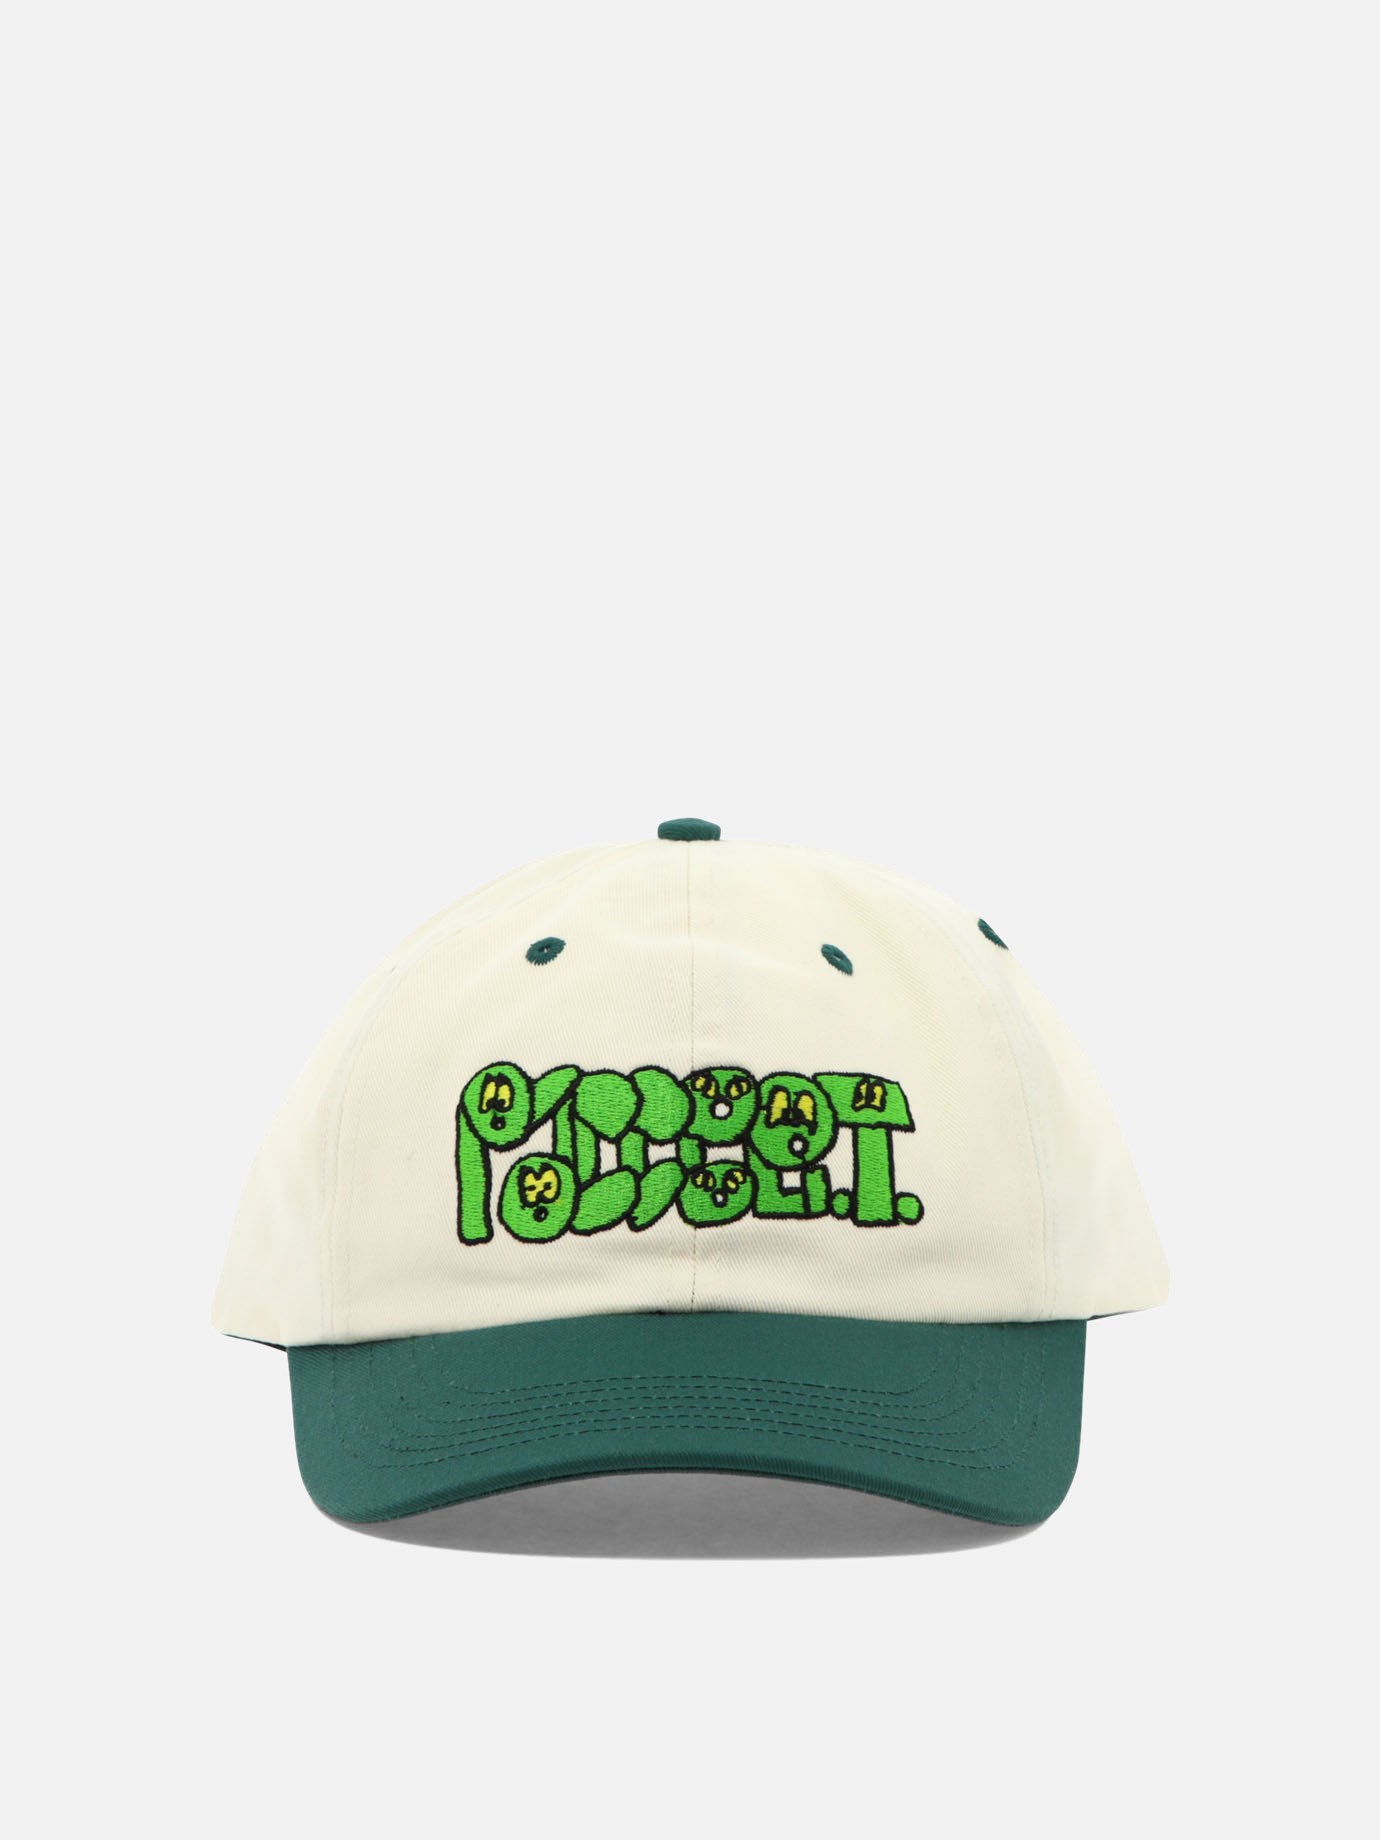 Embroidered baseball cap